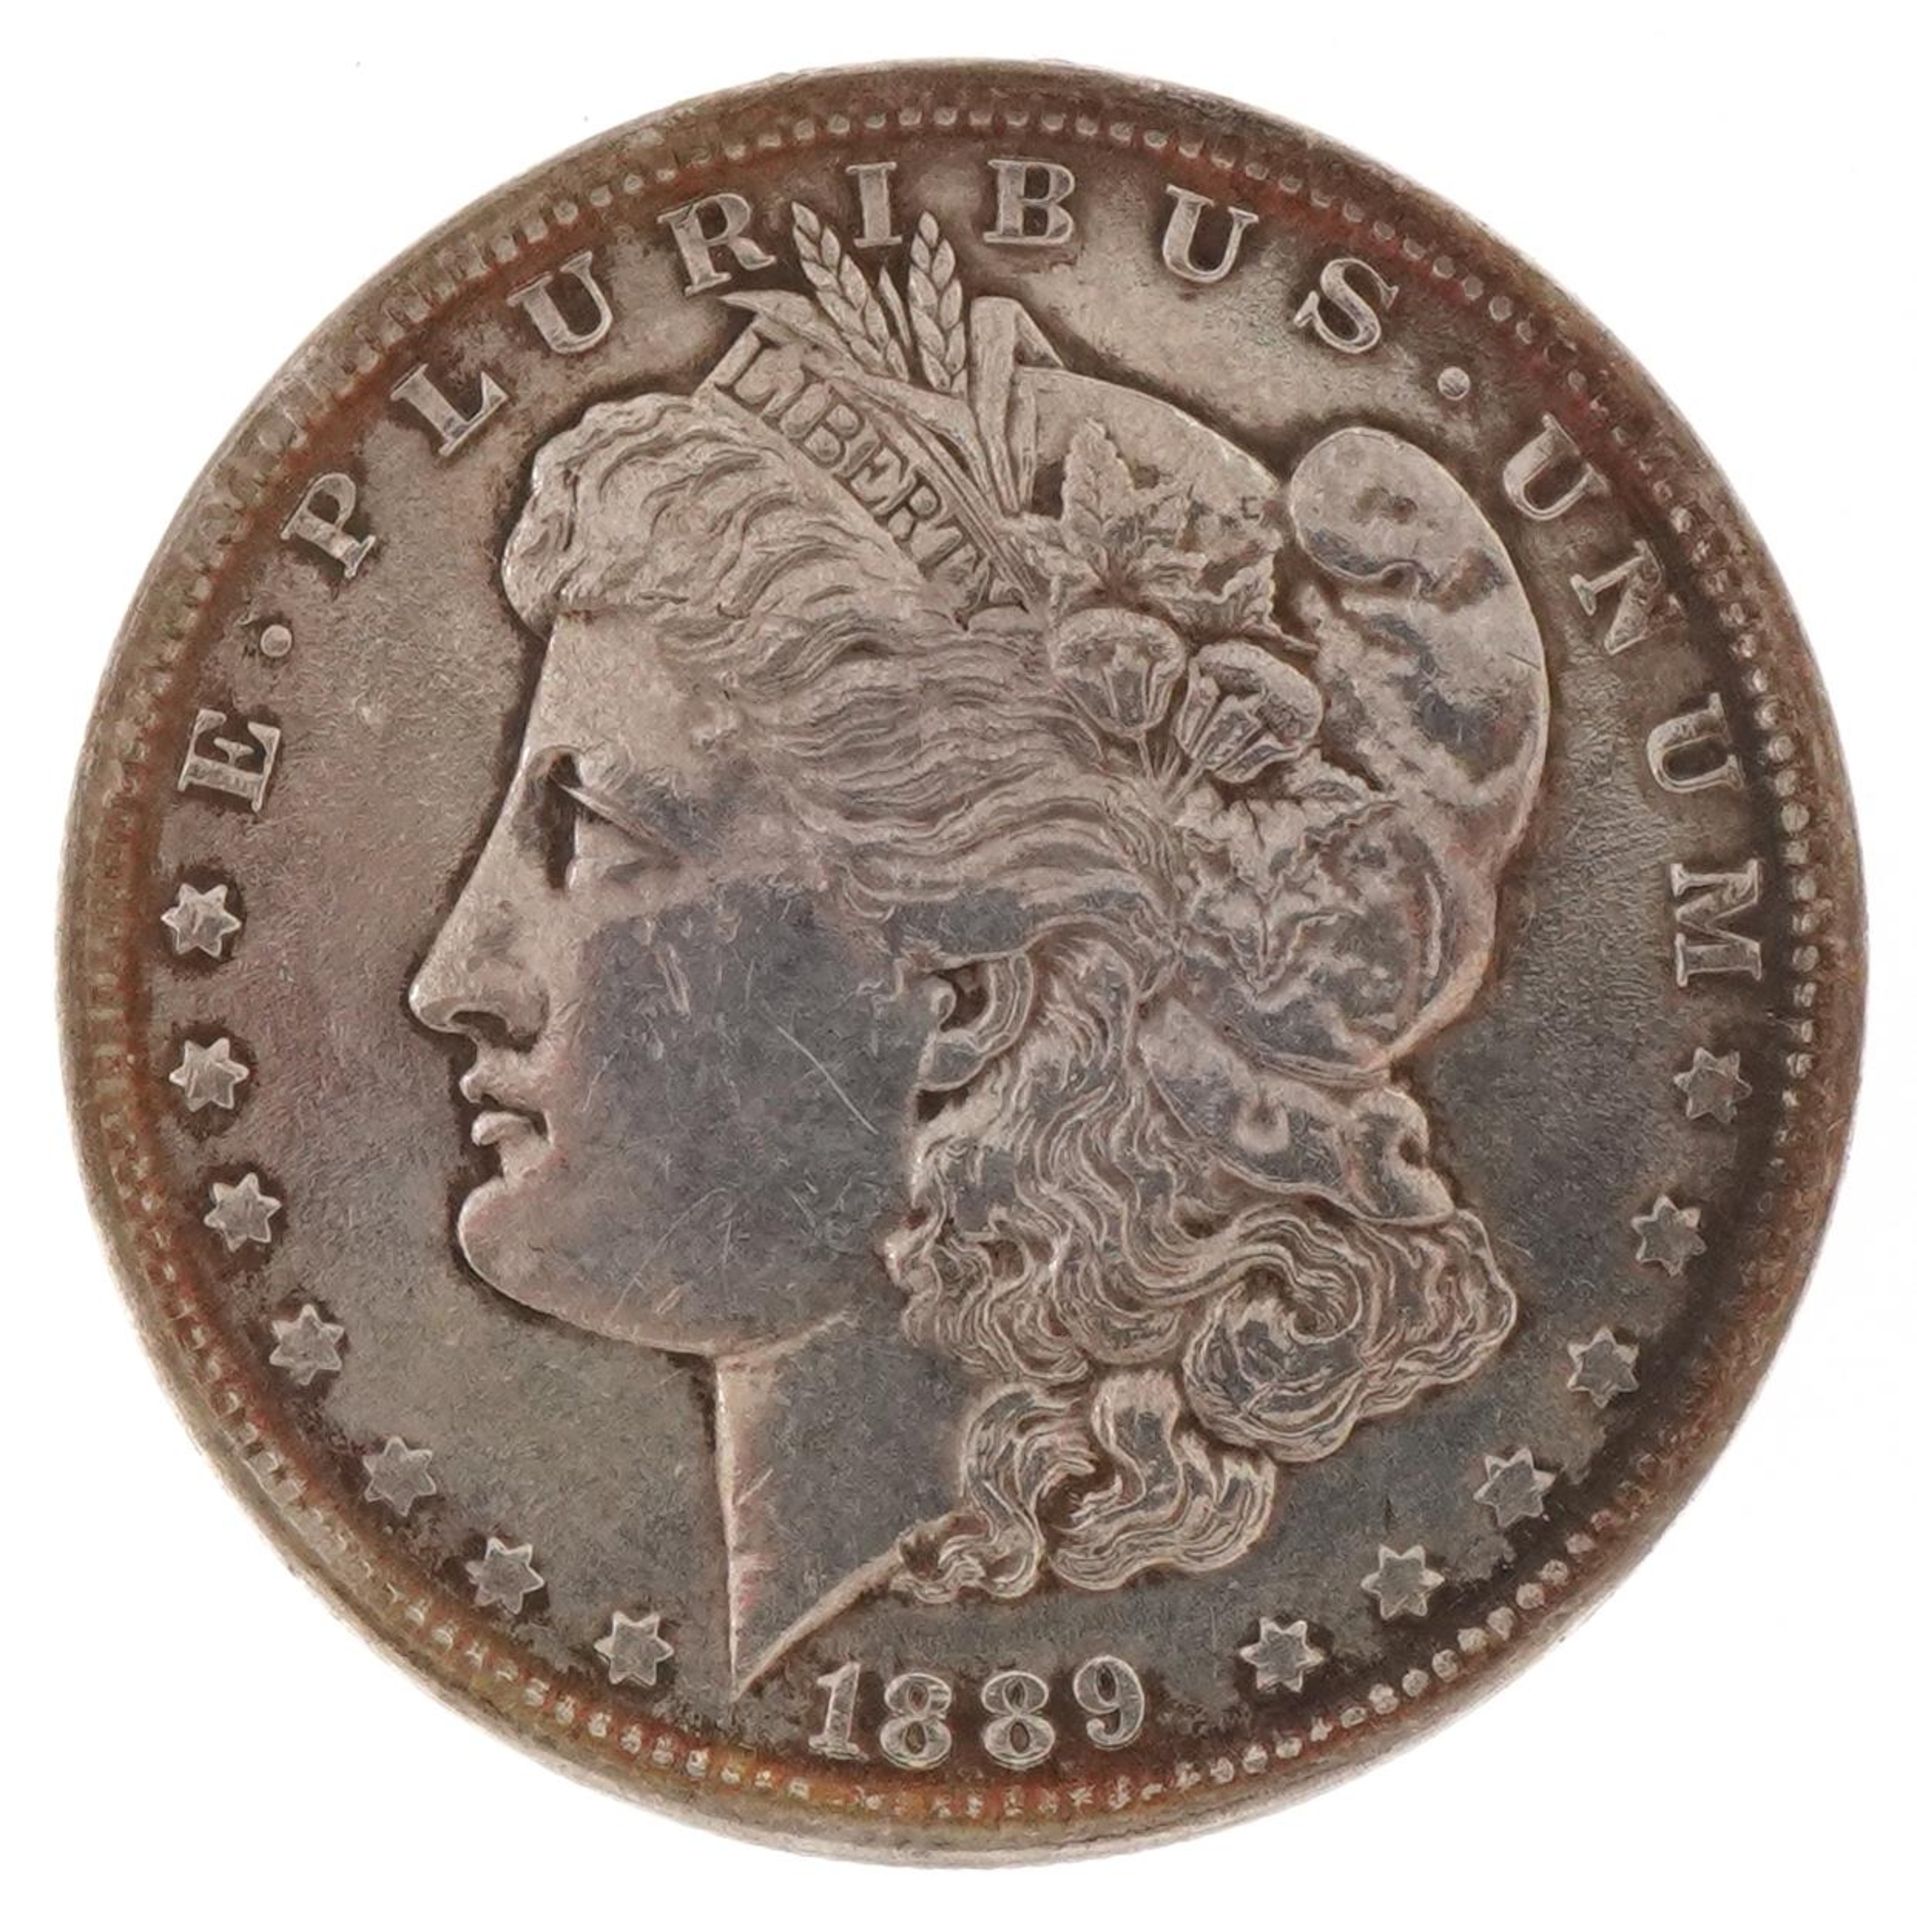 American silver dollar dated 1889